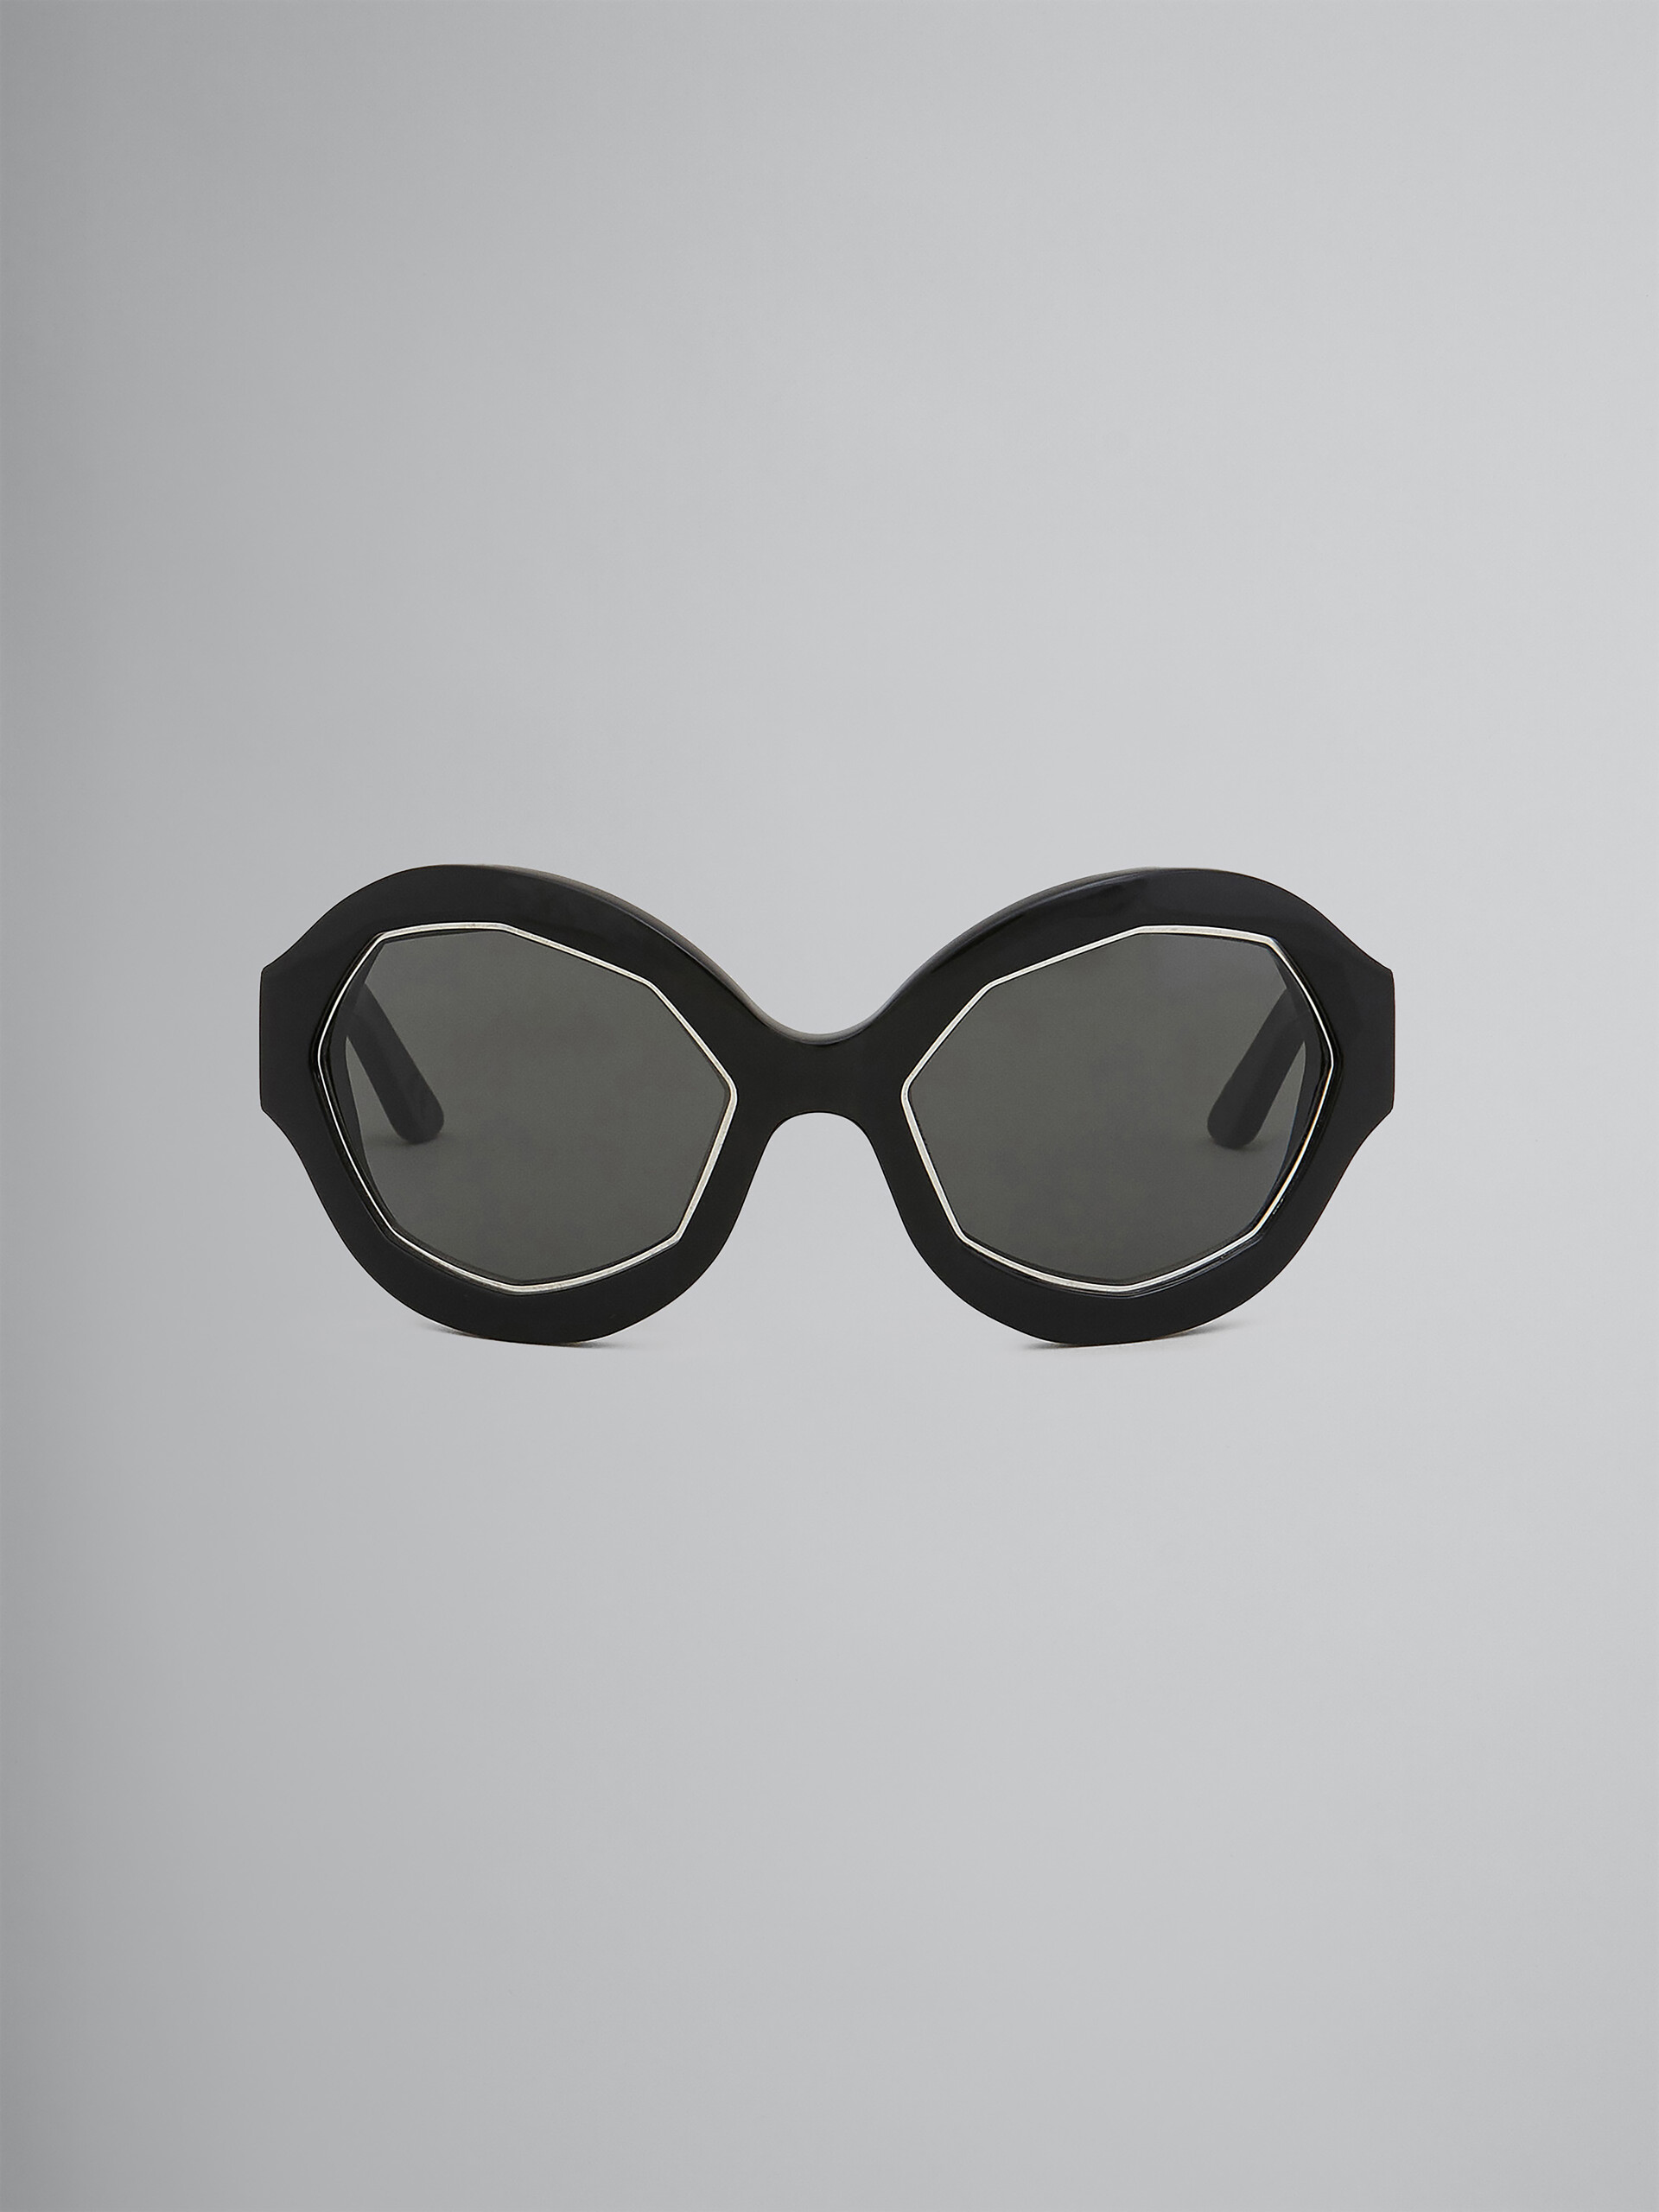 CUMULUS CLOUD black acetate and nylon sunglasses - Optical - Image 1